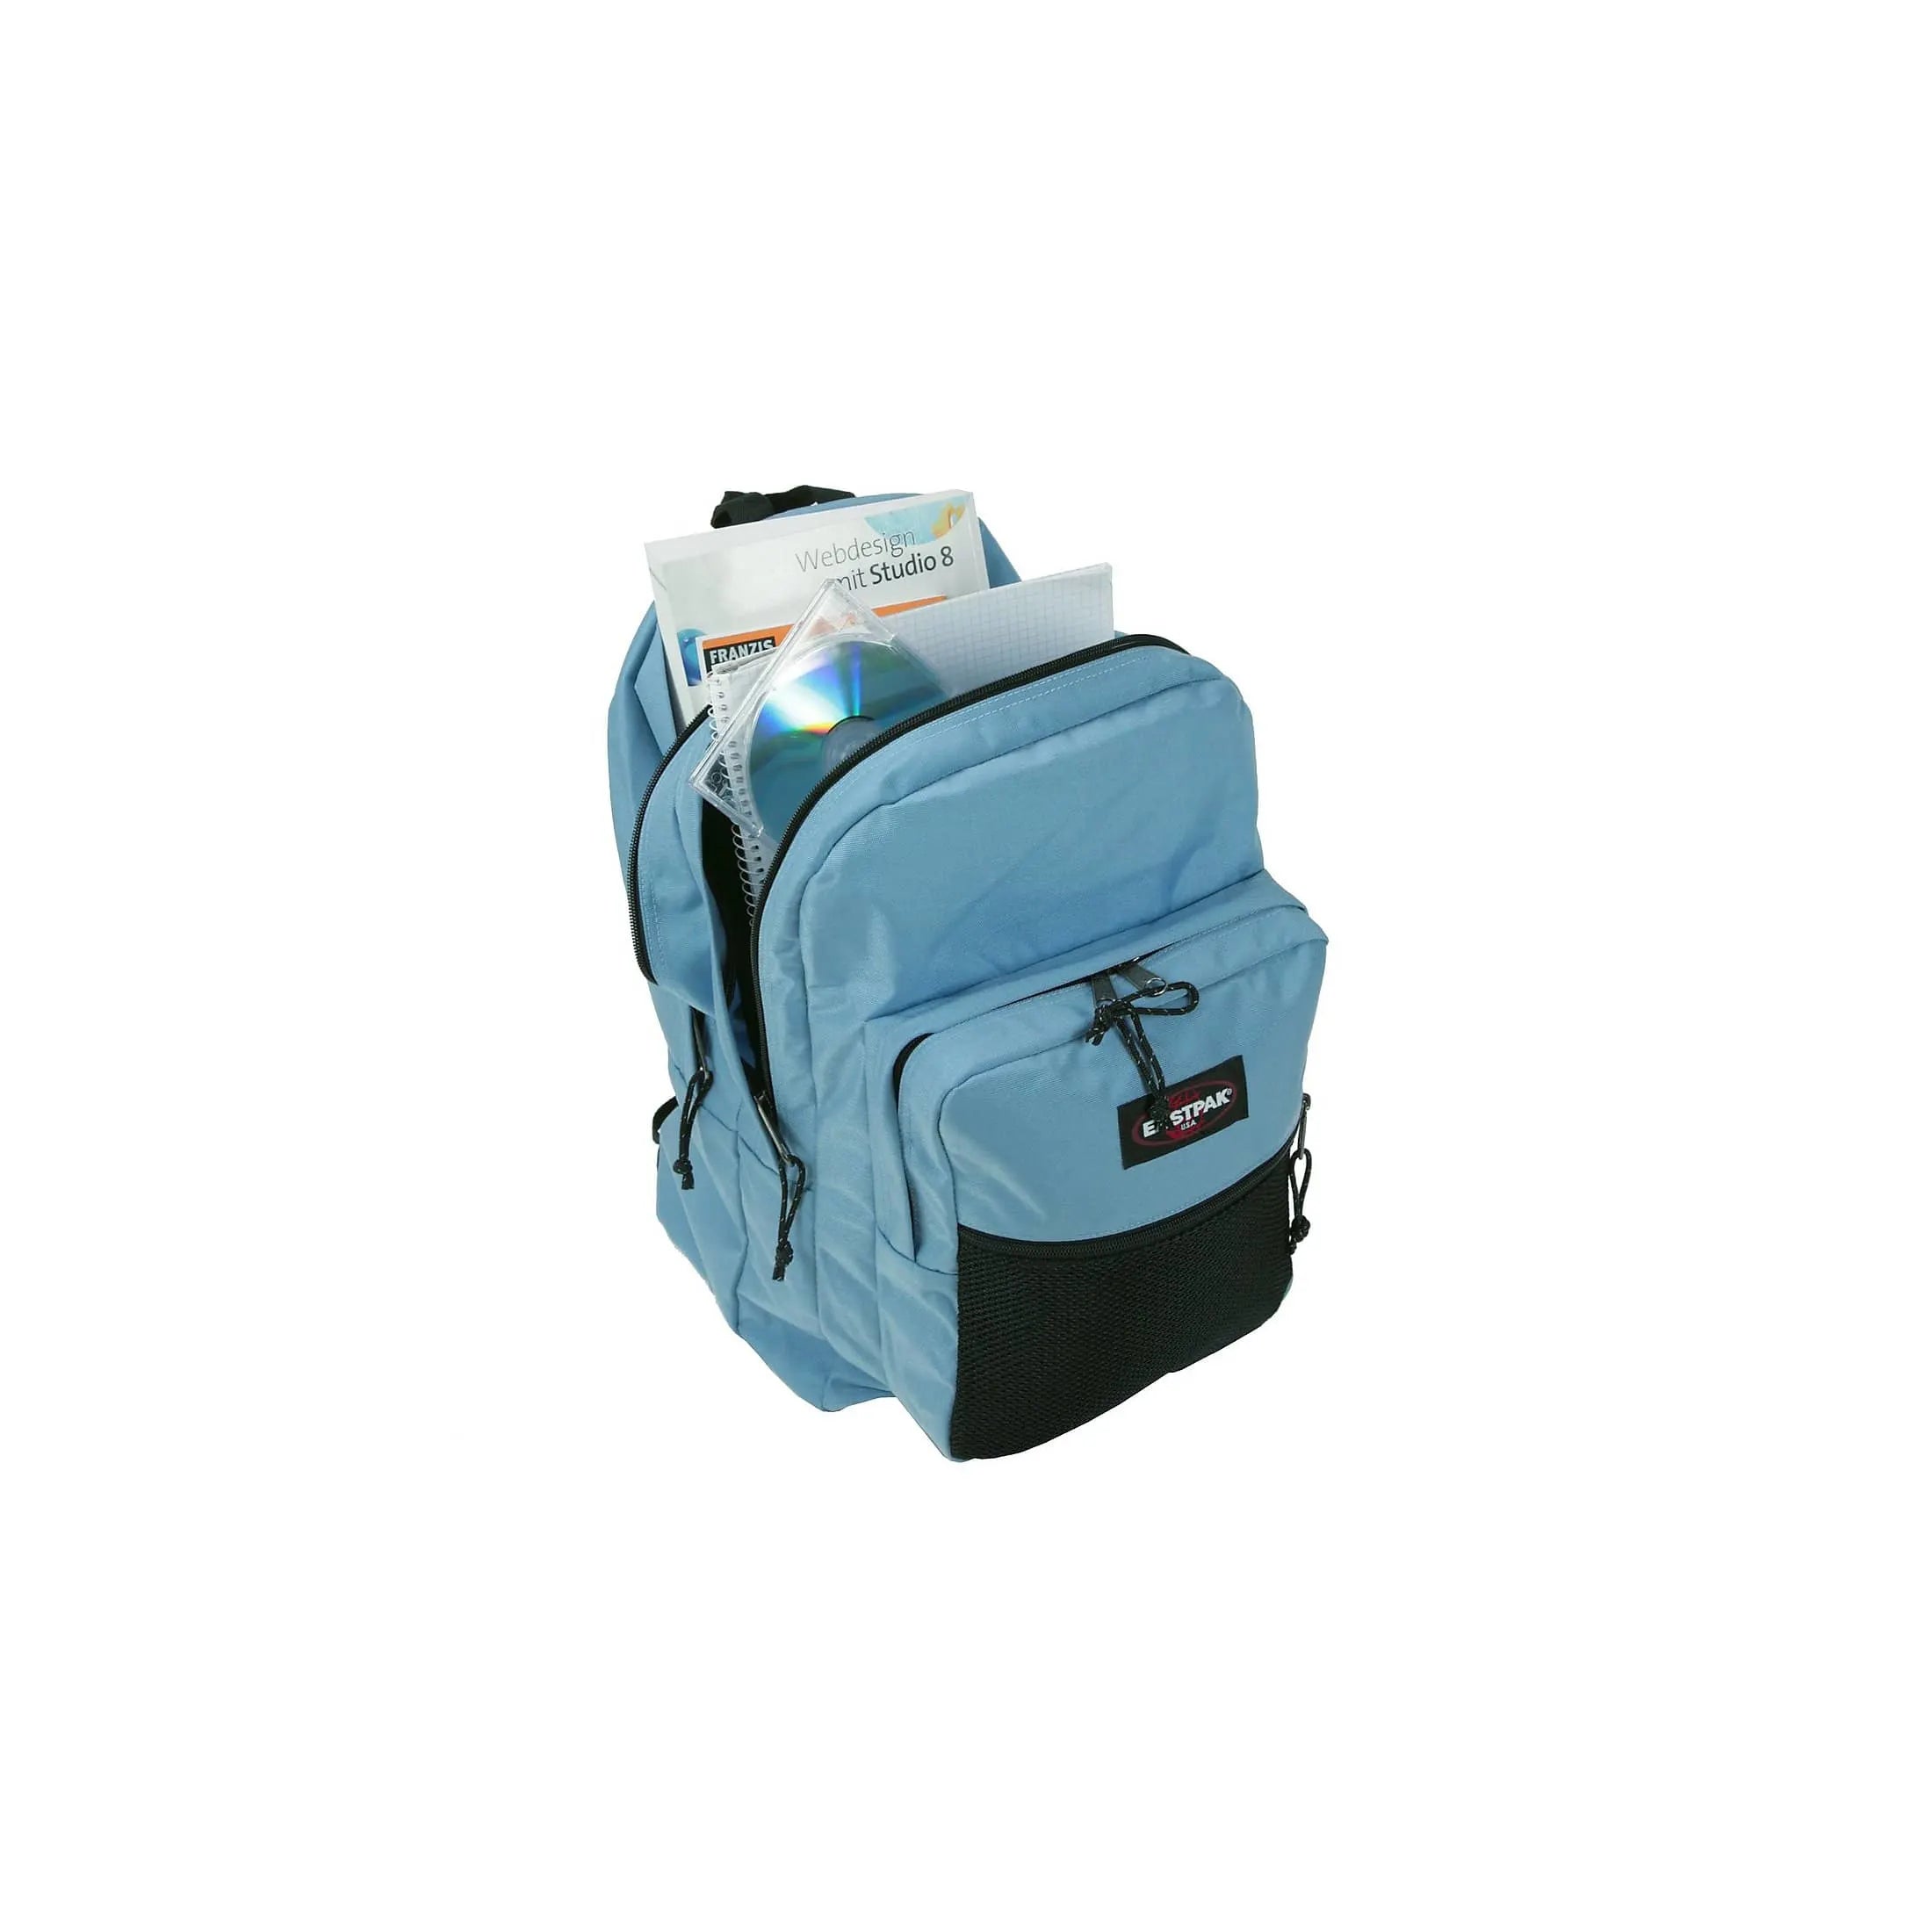 Eastpak Authentic Pinnacle leisure backpack 42 cm - Sailor Red